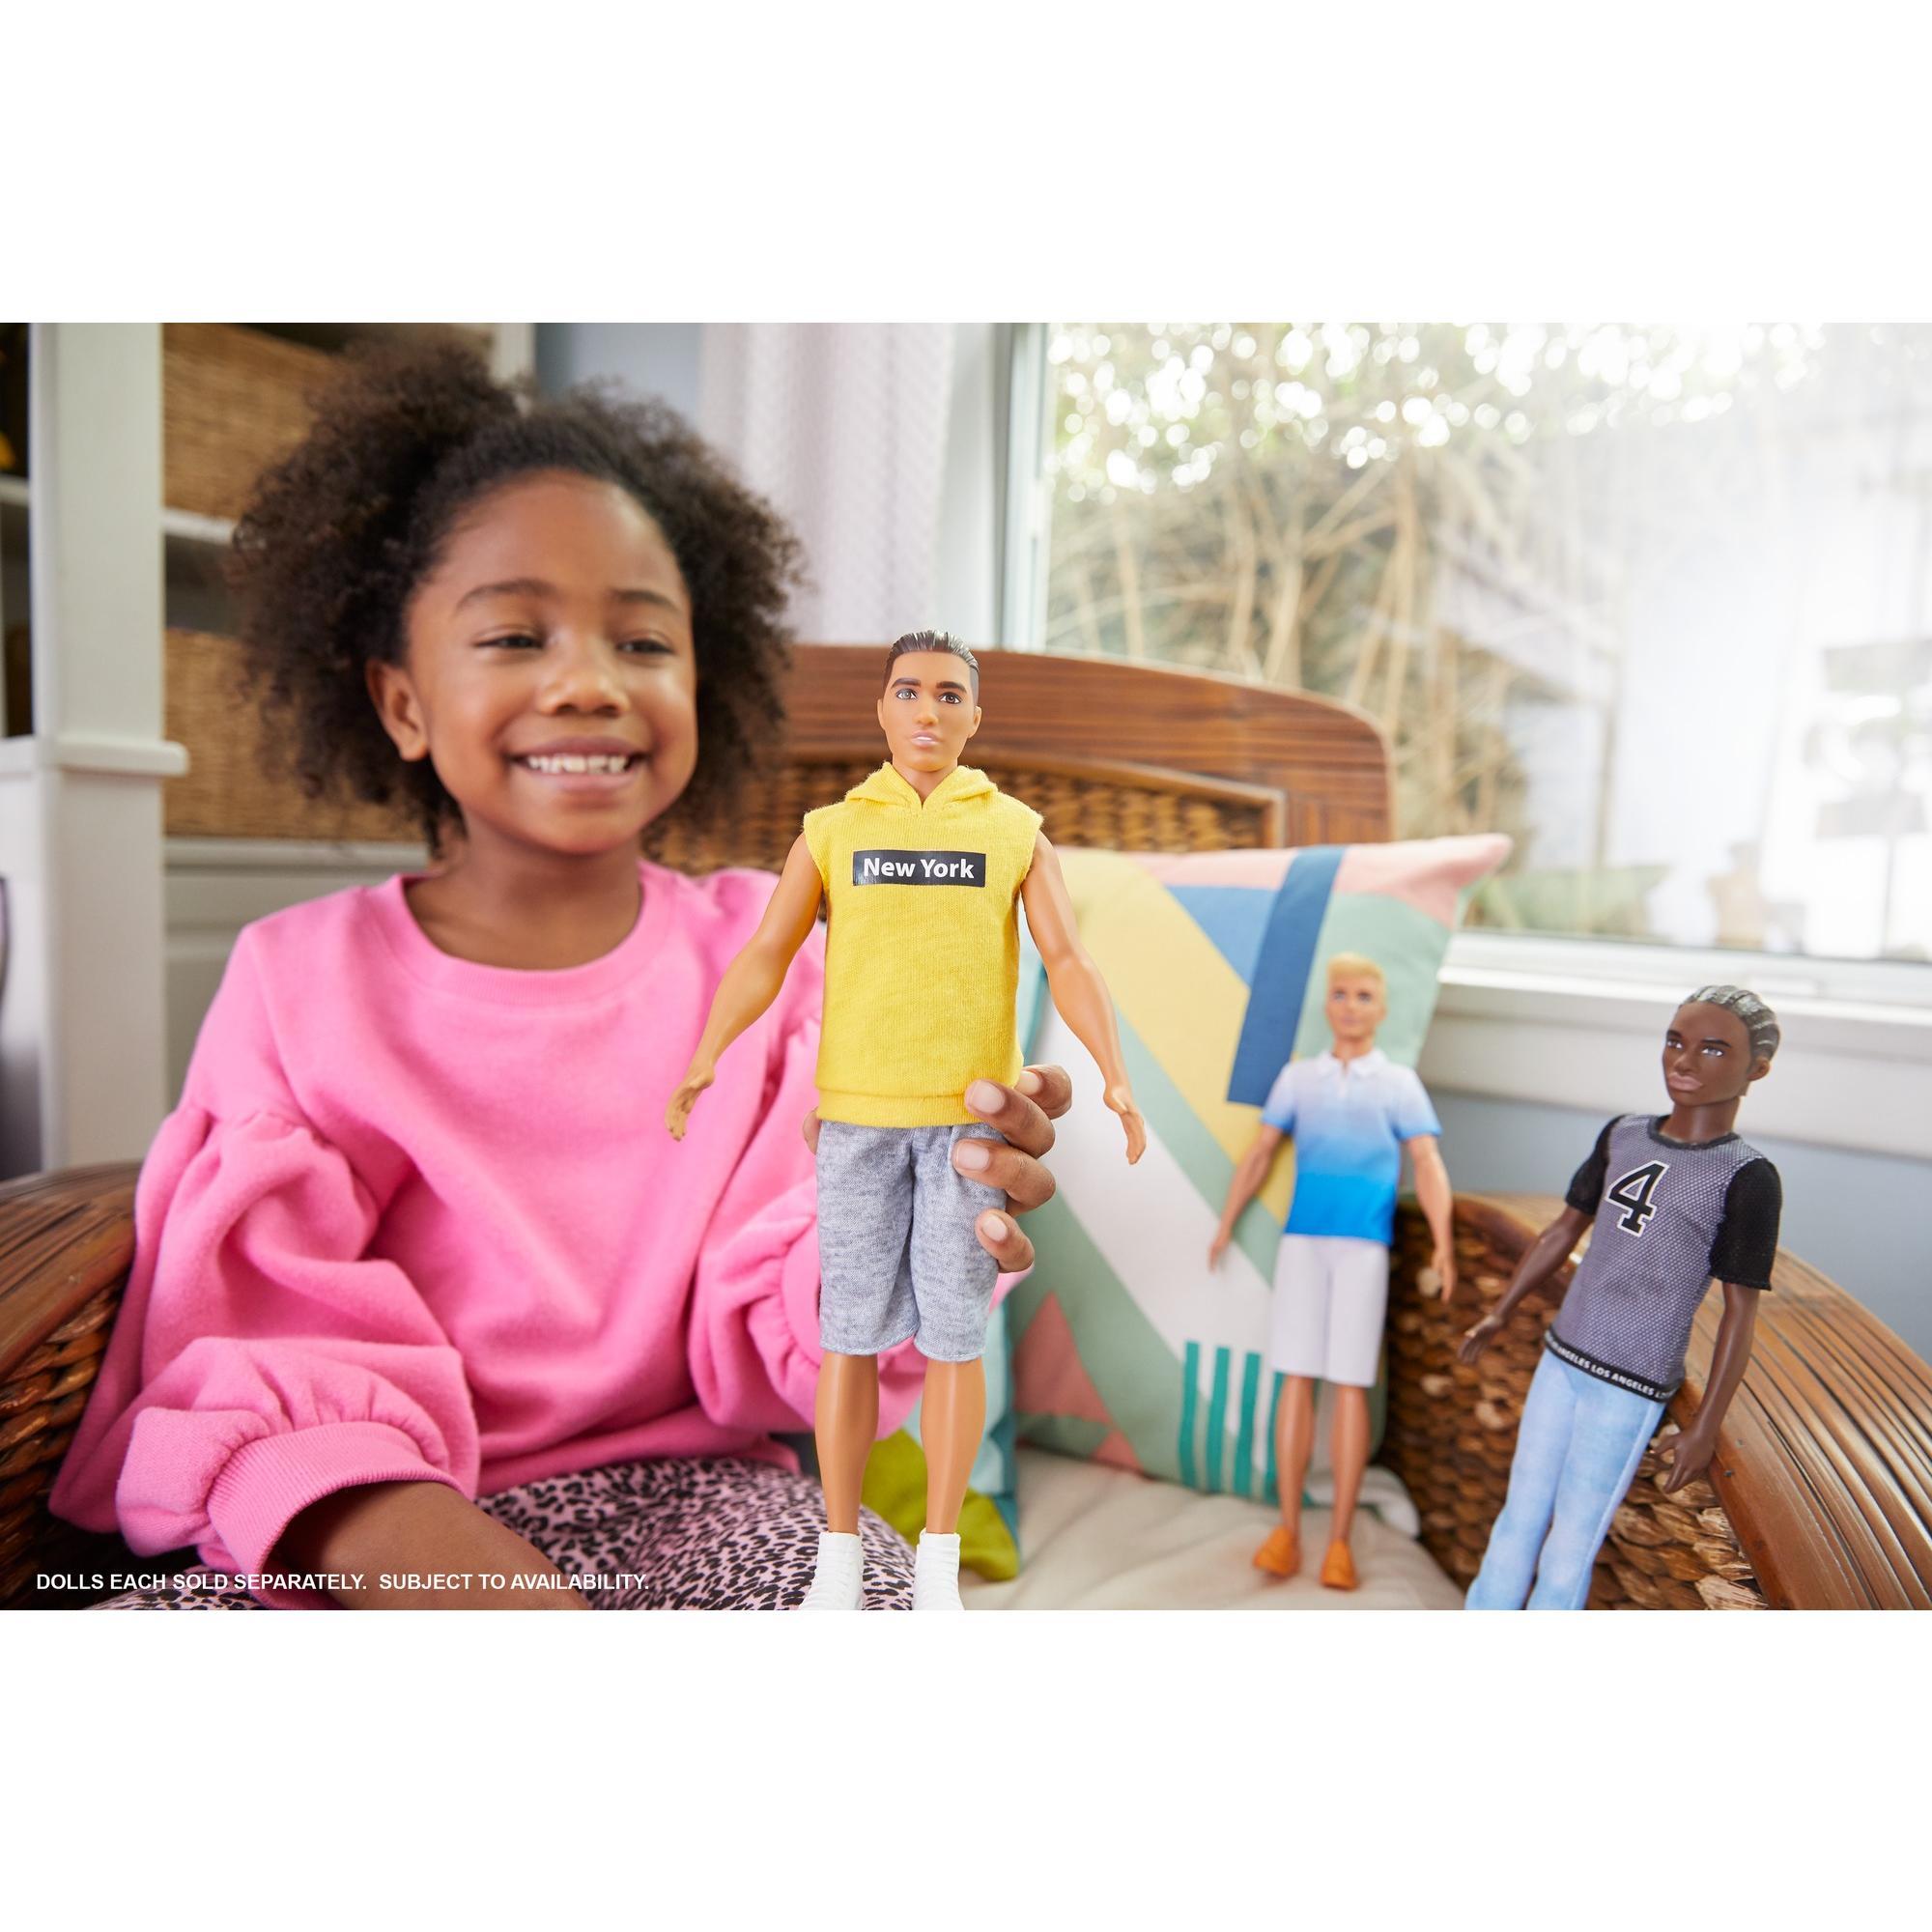 Barbie Ken Fashionistas Doll Wearing Yellow "New York" Hoodie - image 2 of 6